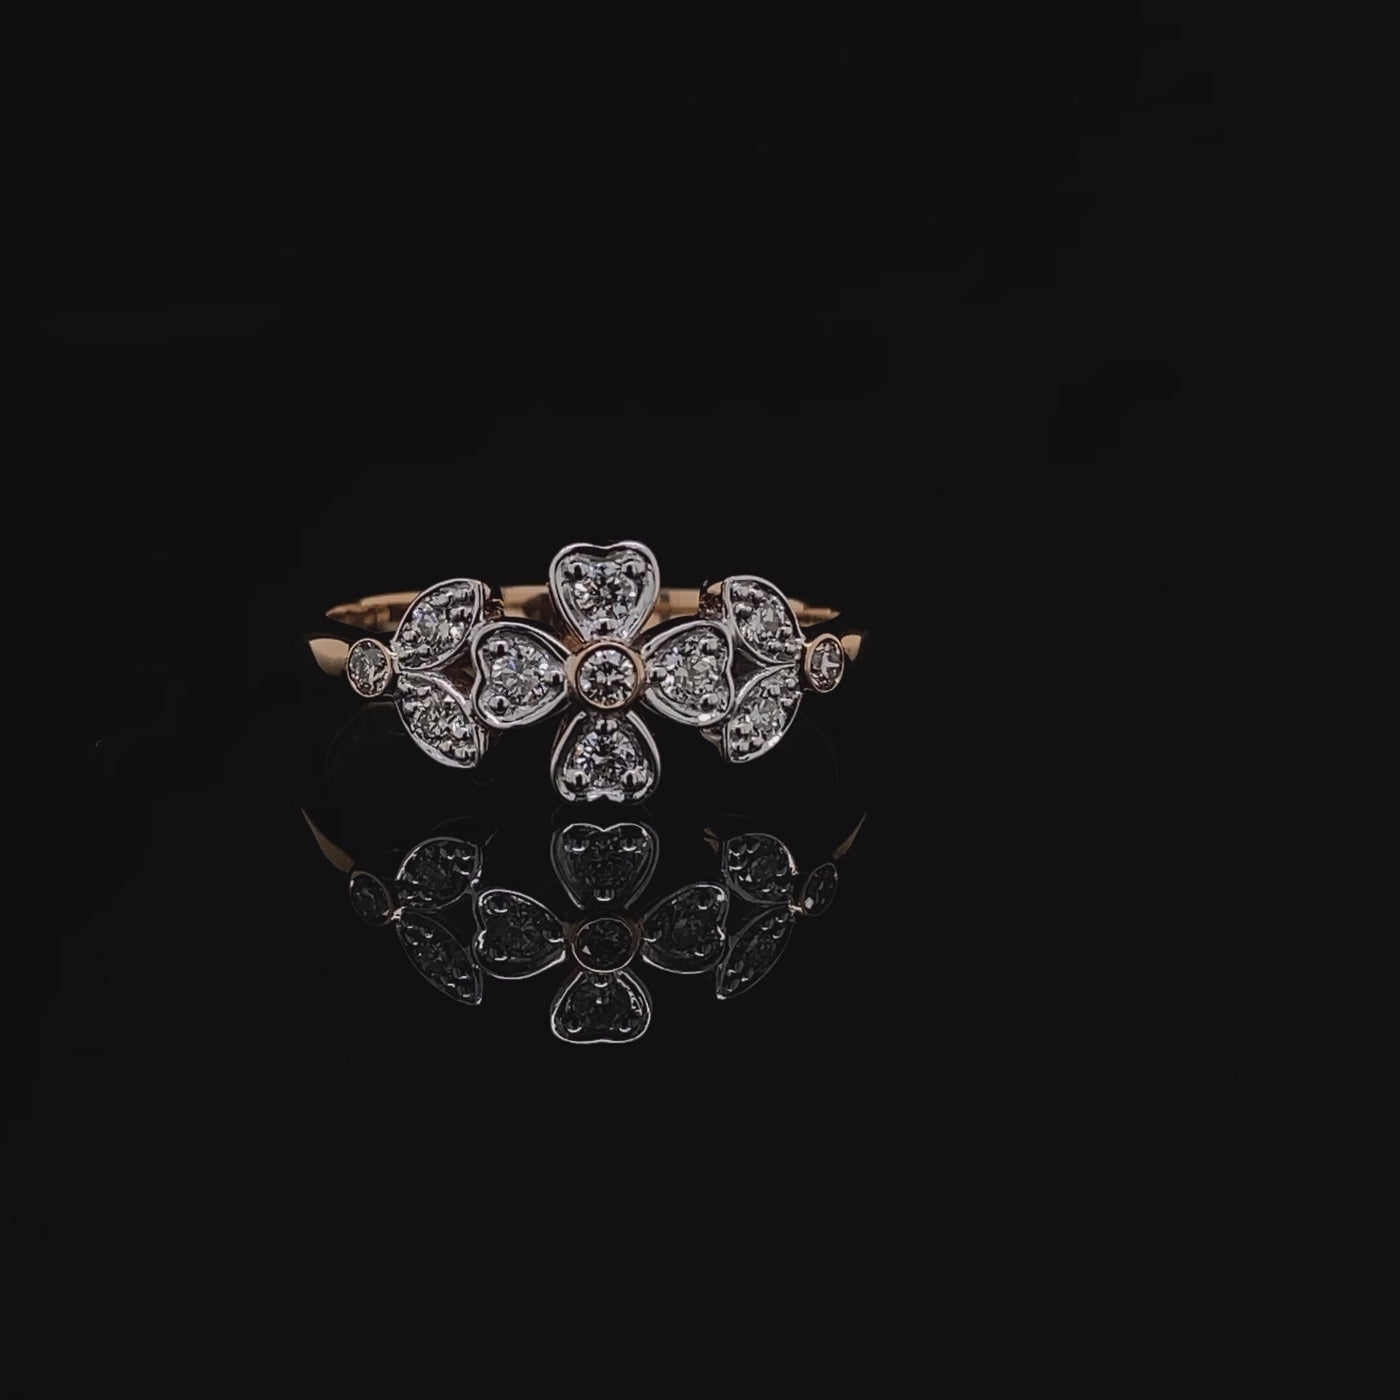 9ct Rose Gold Floral Diamond Dress Ring.